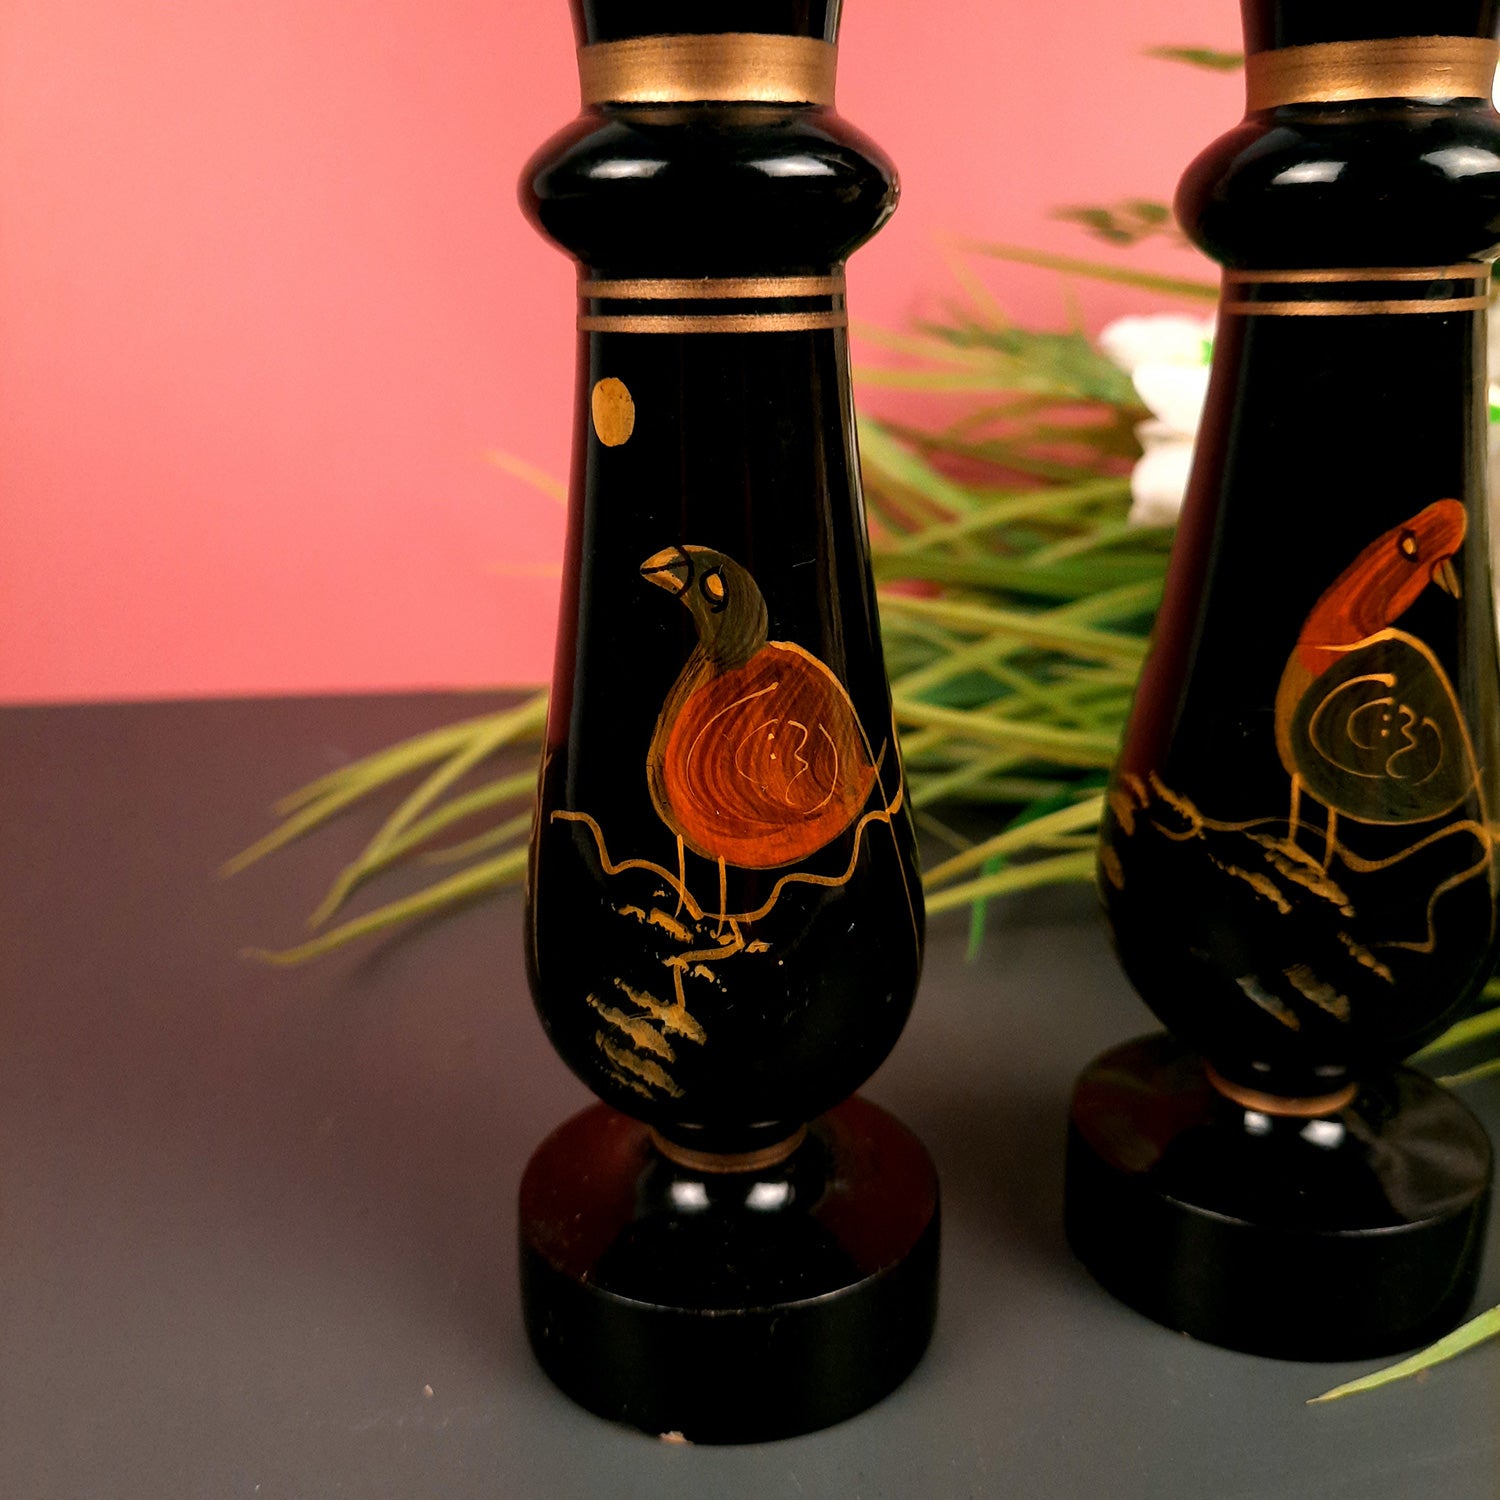 Flower Pot Wooden | Decorative Vase - For Table, Home Decor, Office & Gifts - 8 Inch - Apkamart